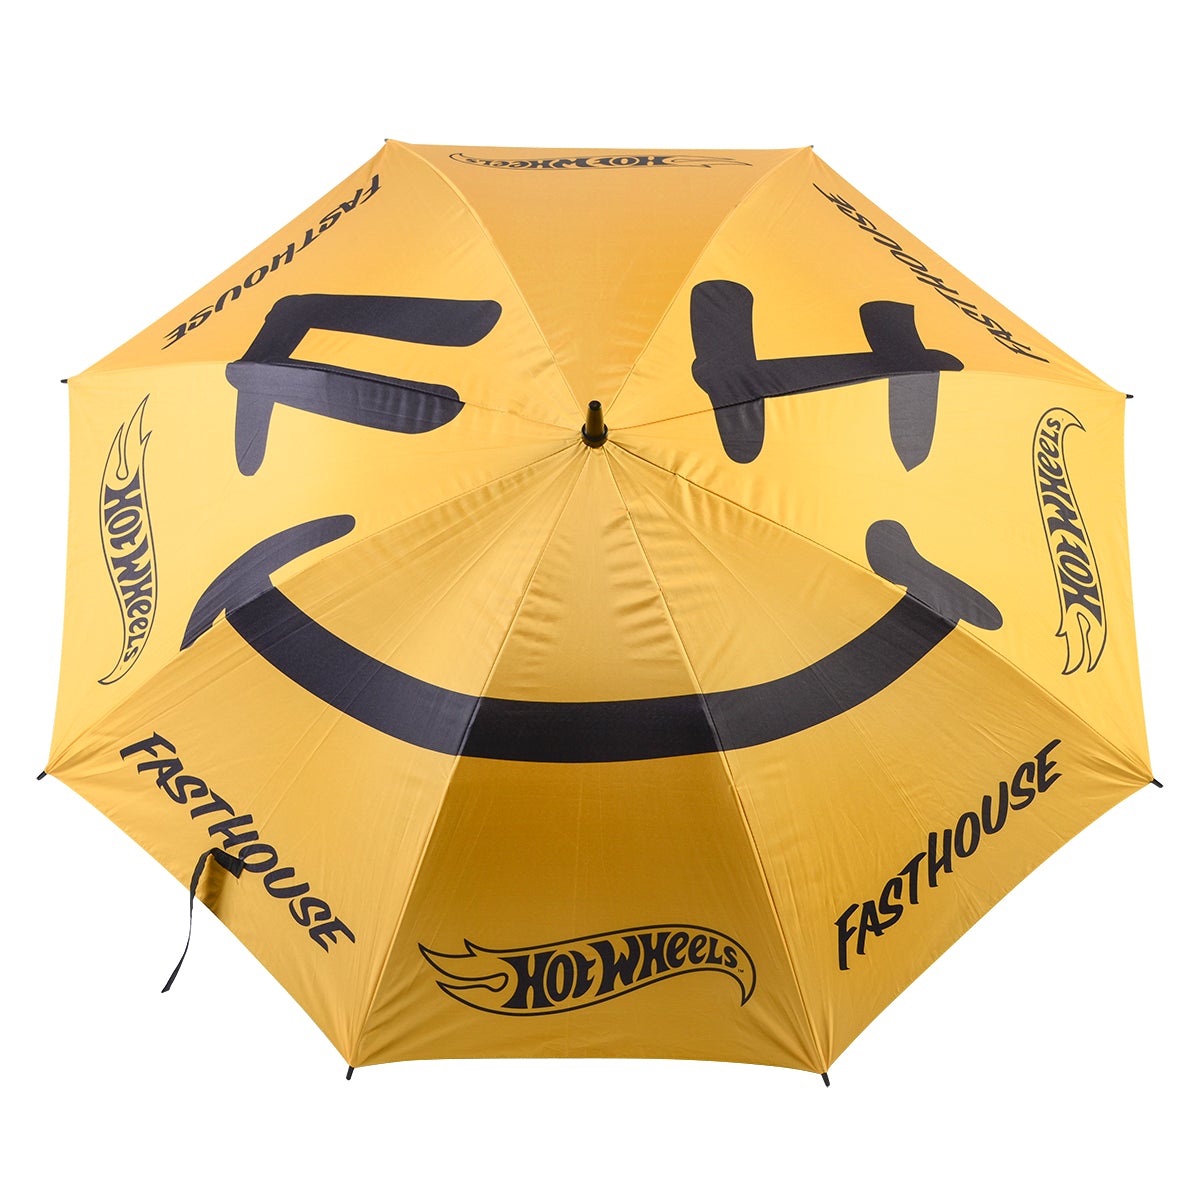 The Smiley Hot Wheels Umbrella - Yellow/Black